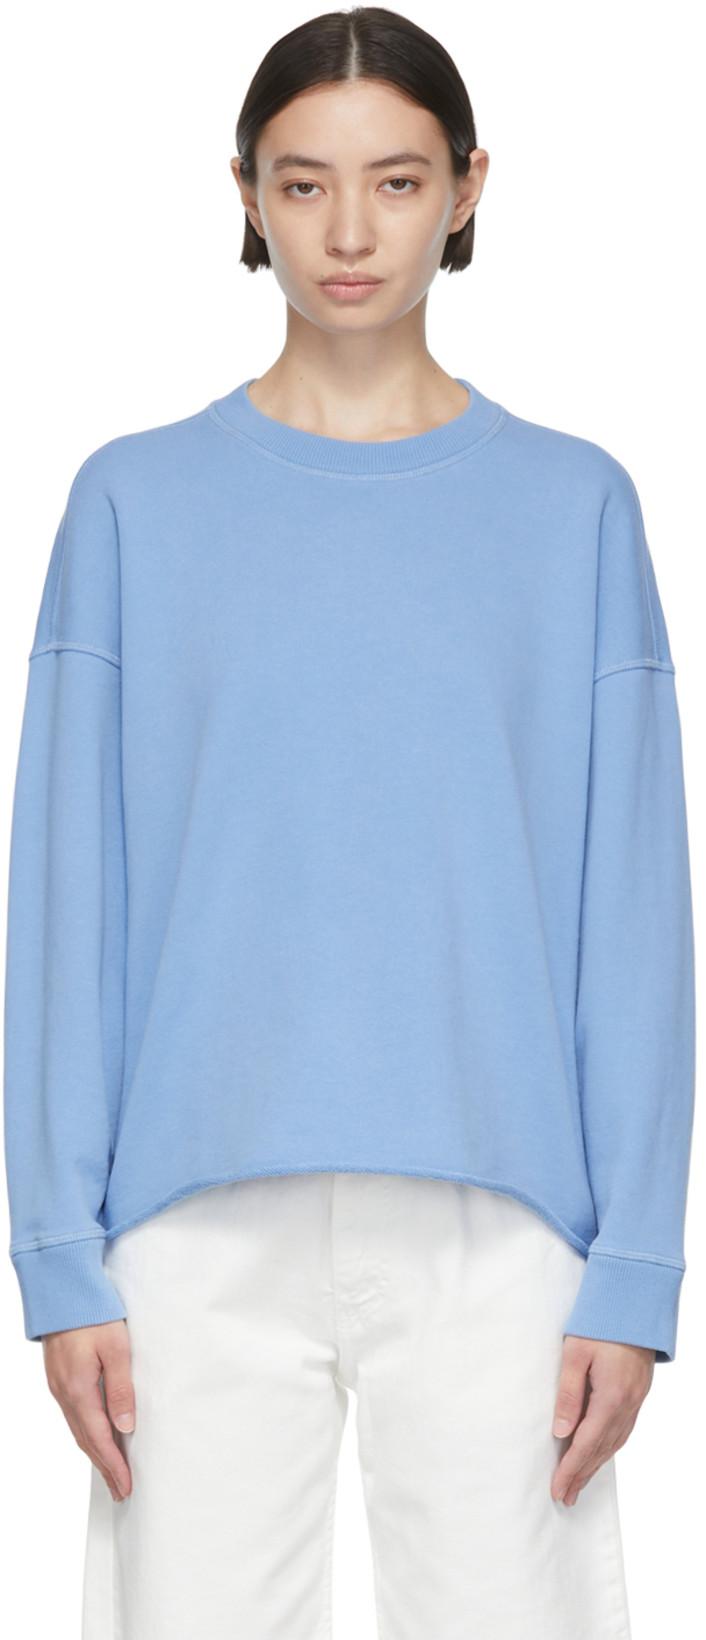 Blue Cotton Sweatshirt by 6397